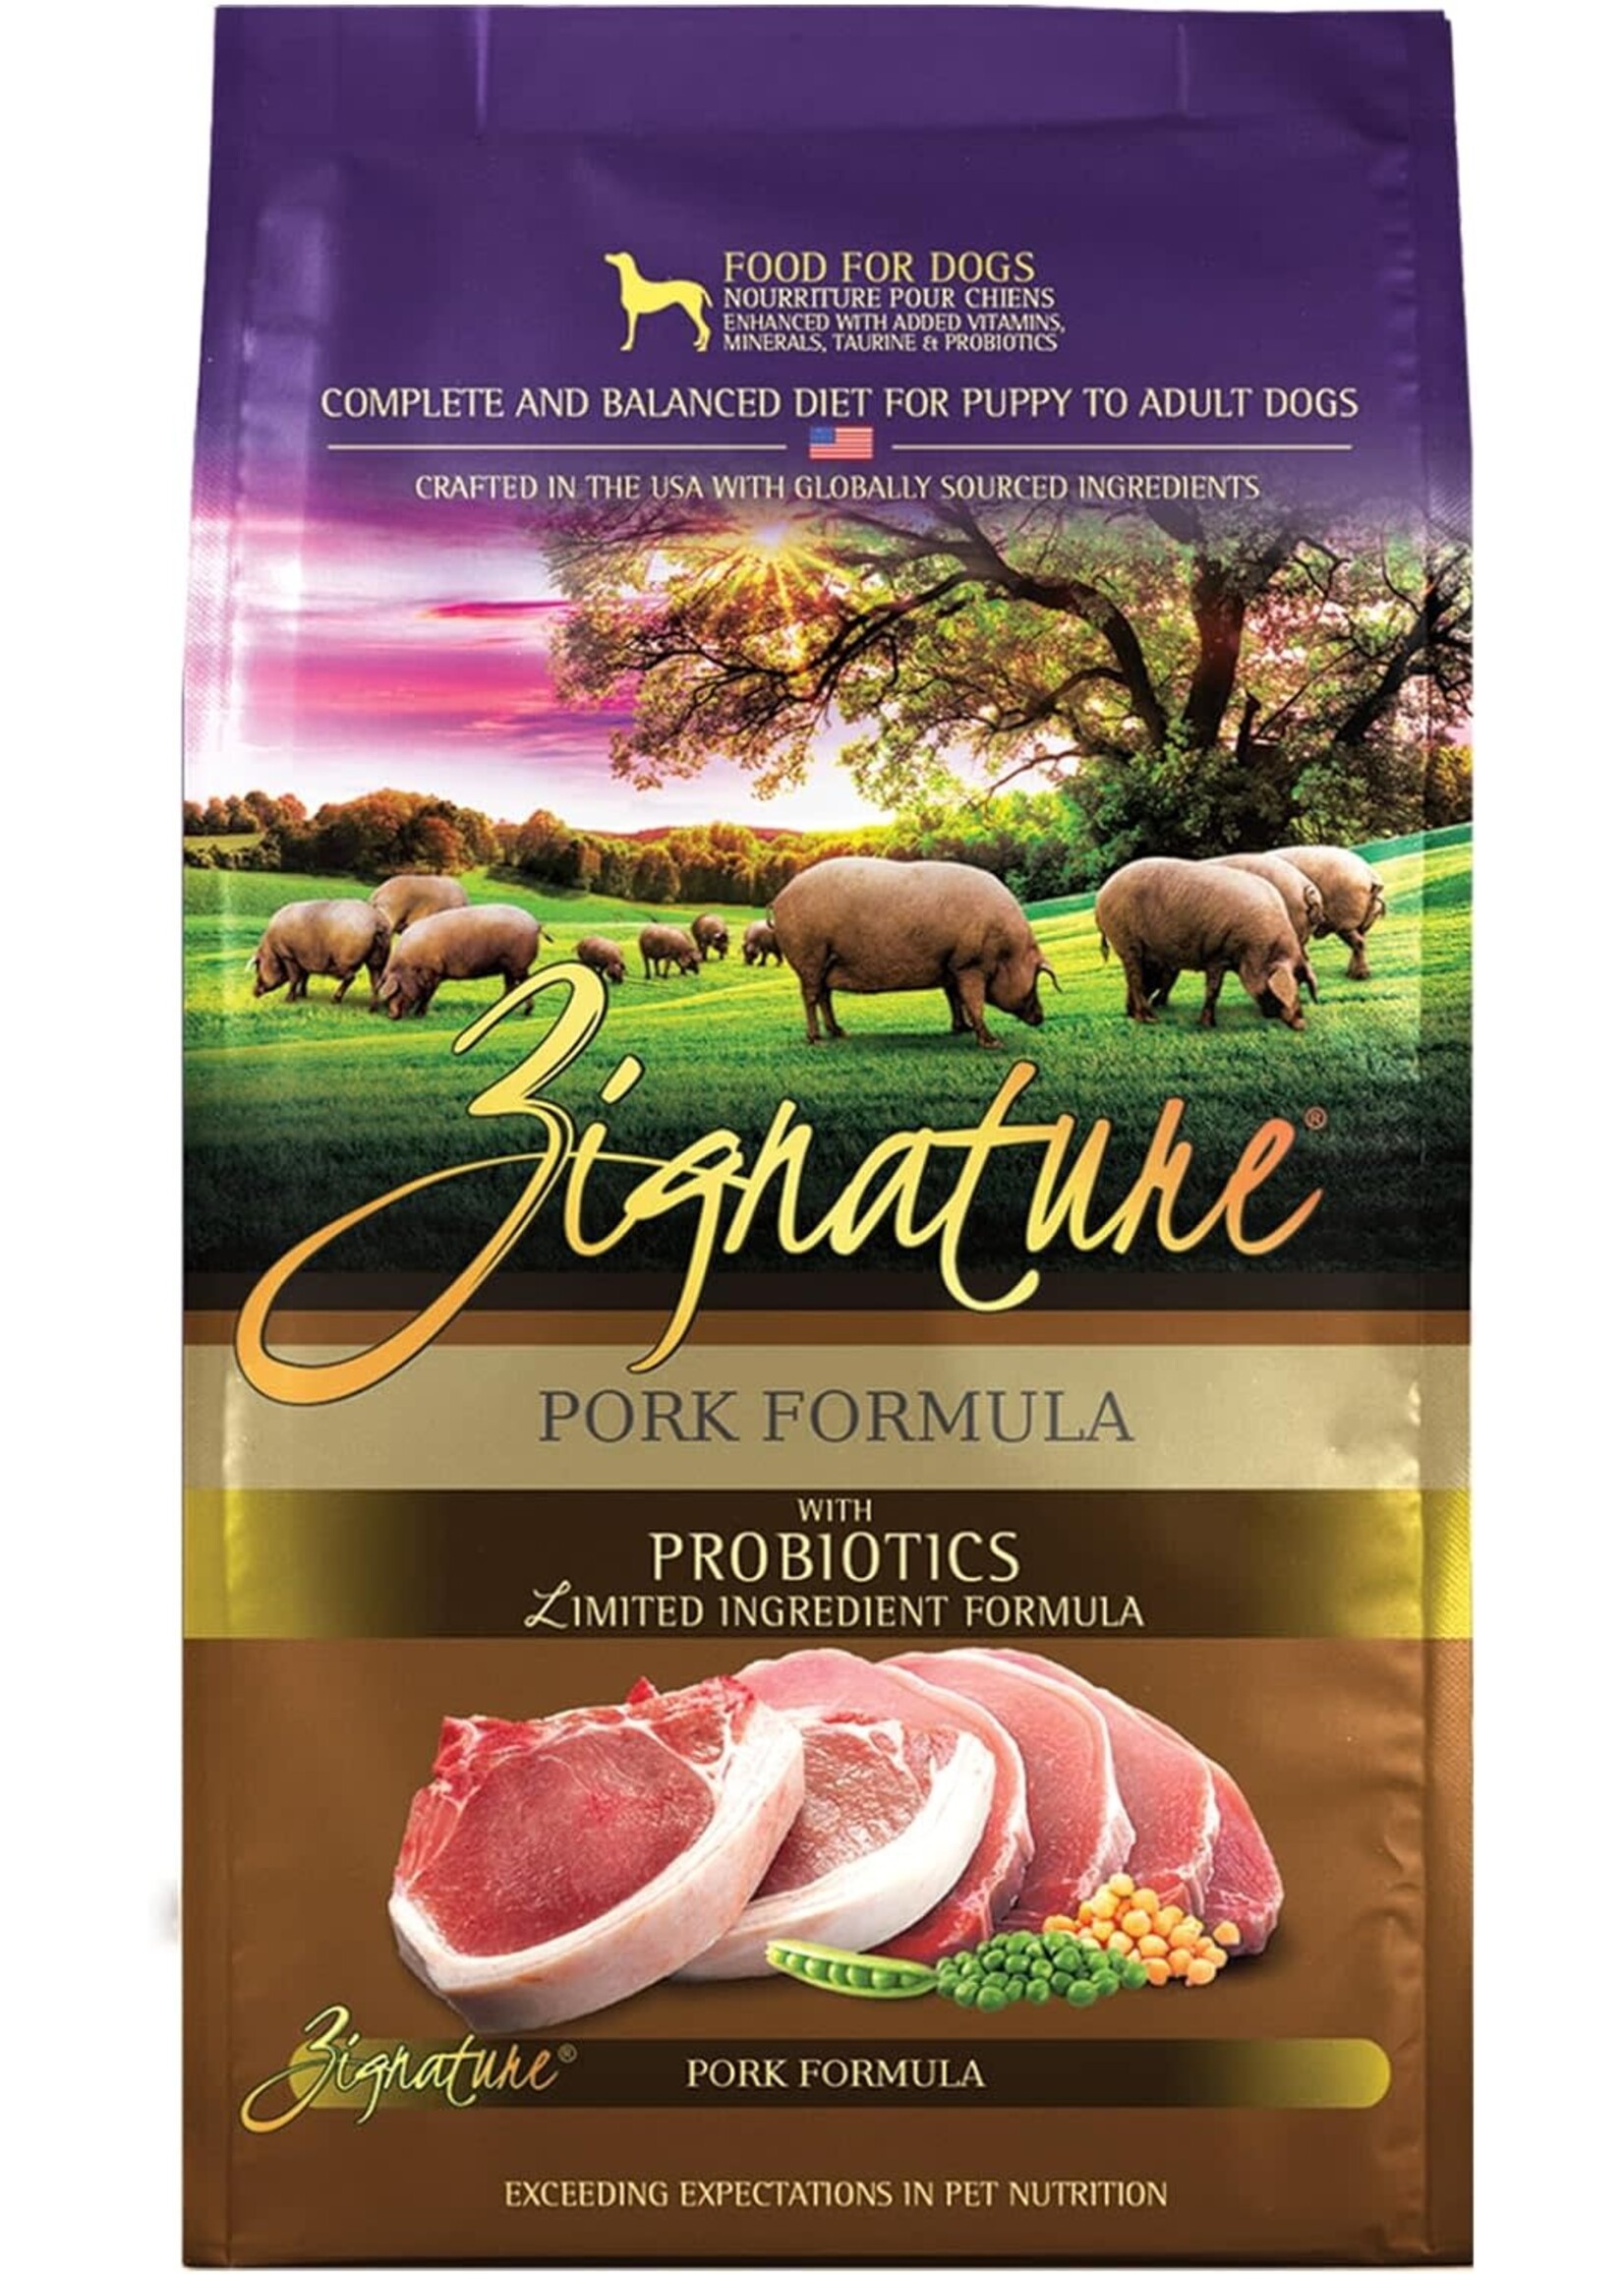 Zignature Pork Formula with Probiotics Limited Ingredient Formula Grain Free All Life Stages Dog Food 4 lbs